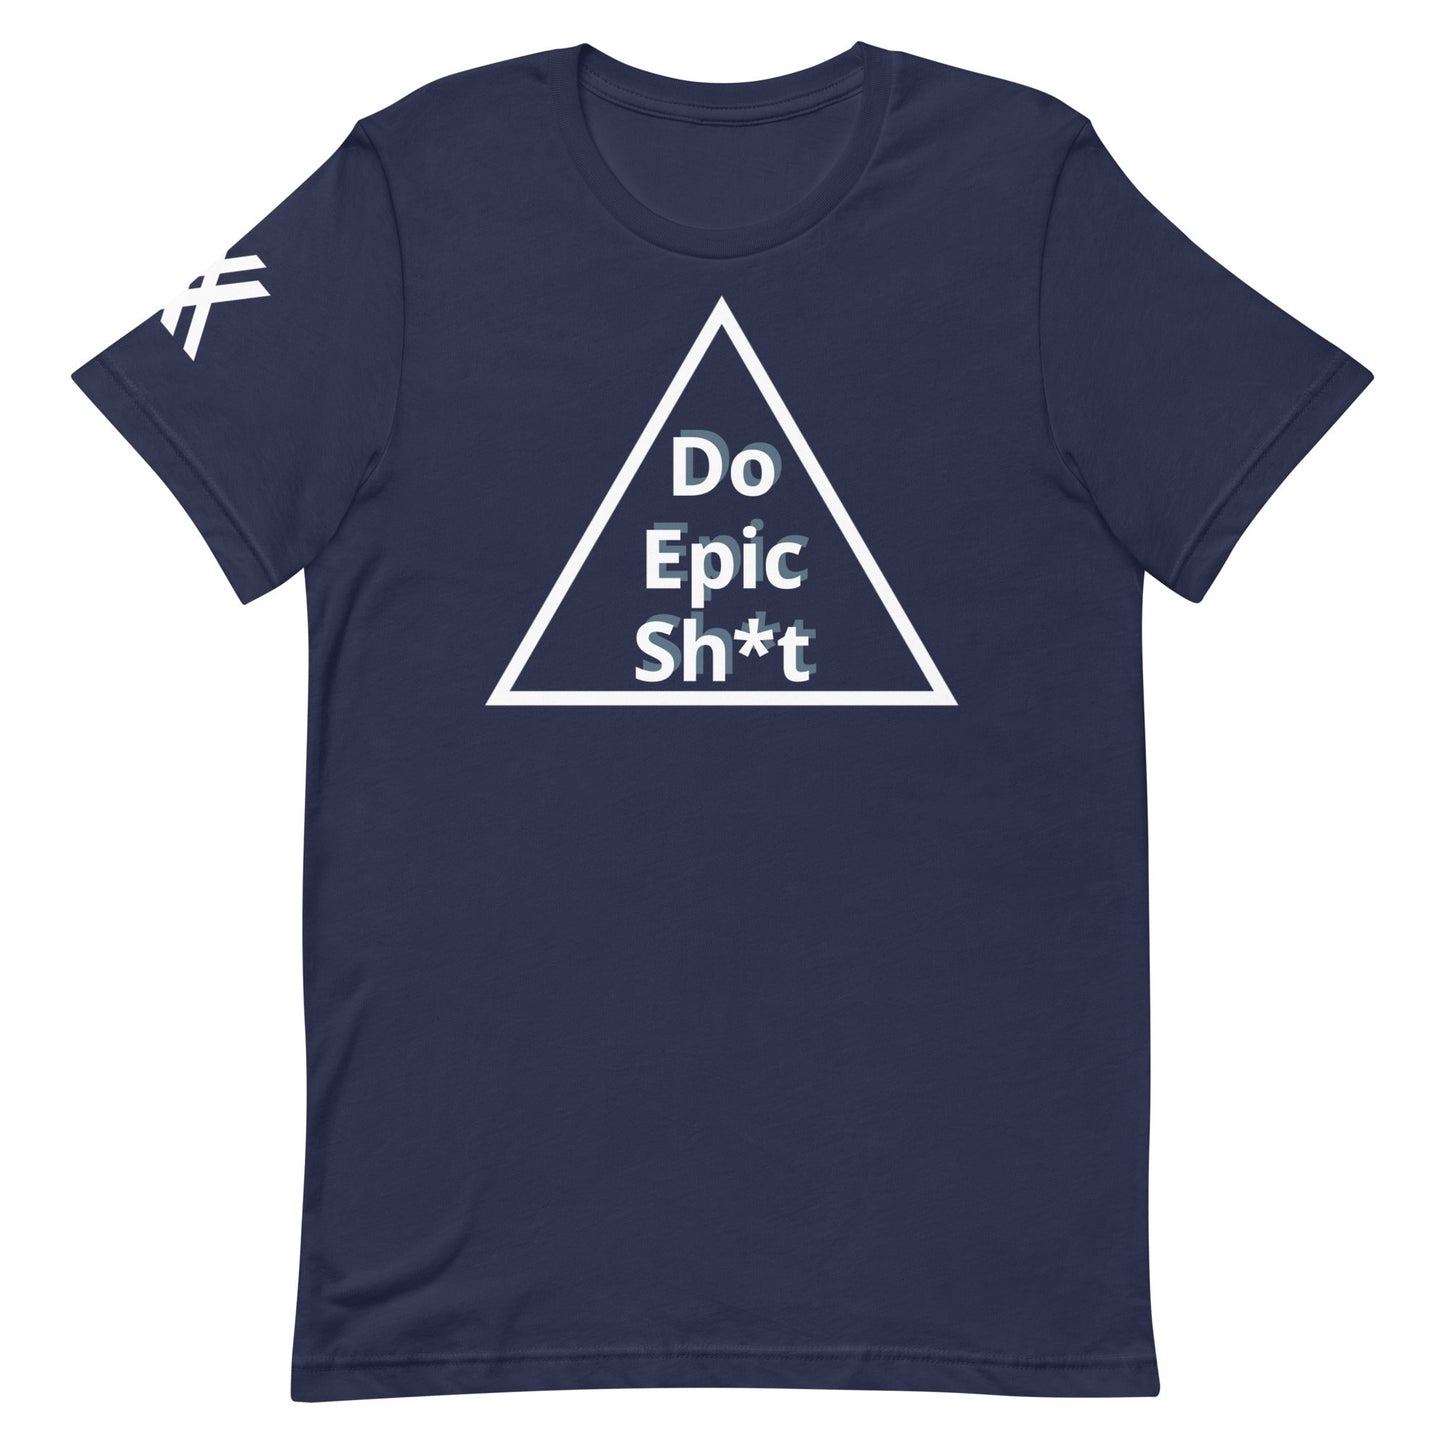 Do Epic Sh*t Unisex t-shirt